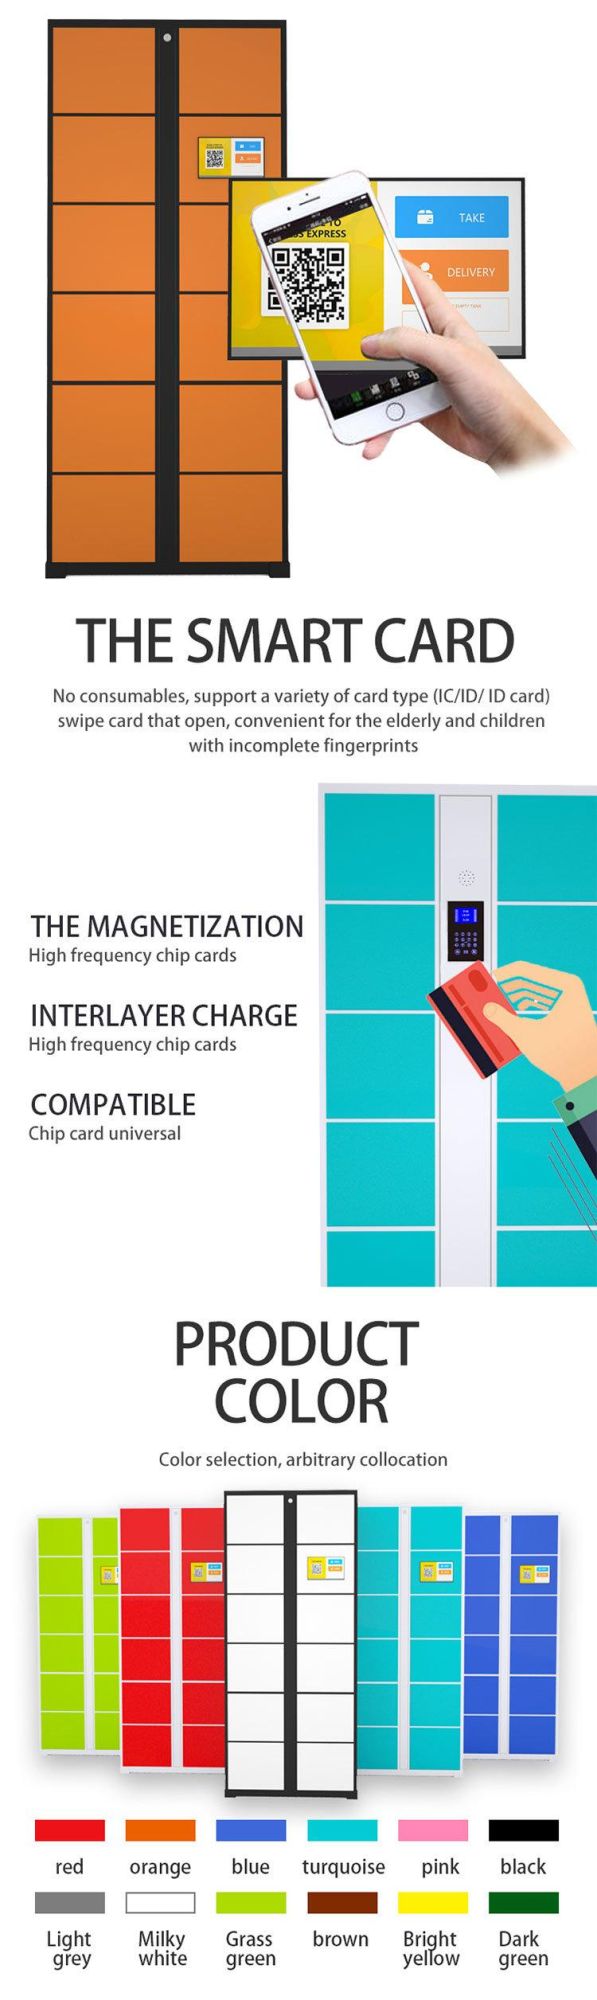 Smart Fingerprint Recognition Locker Rental Locker Supports Credit Card, Cash and Coin Payment